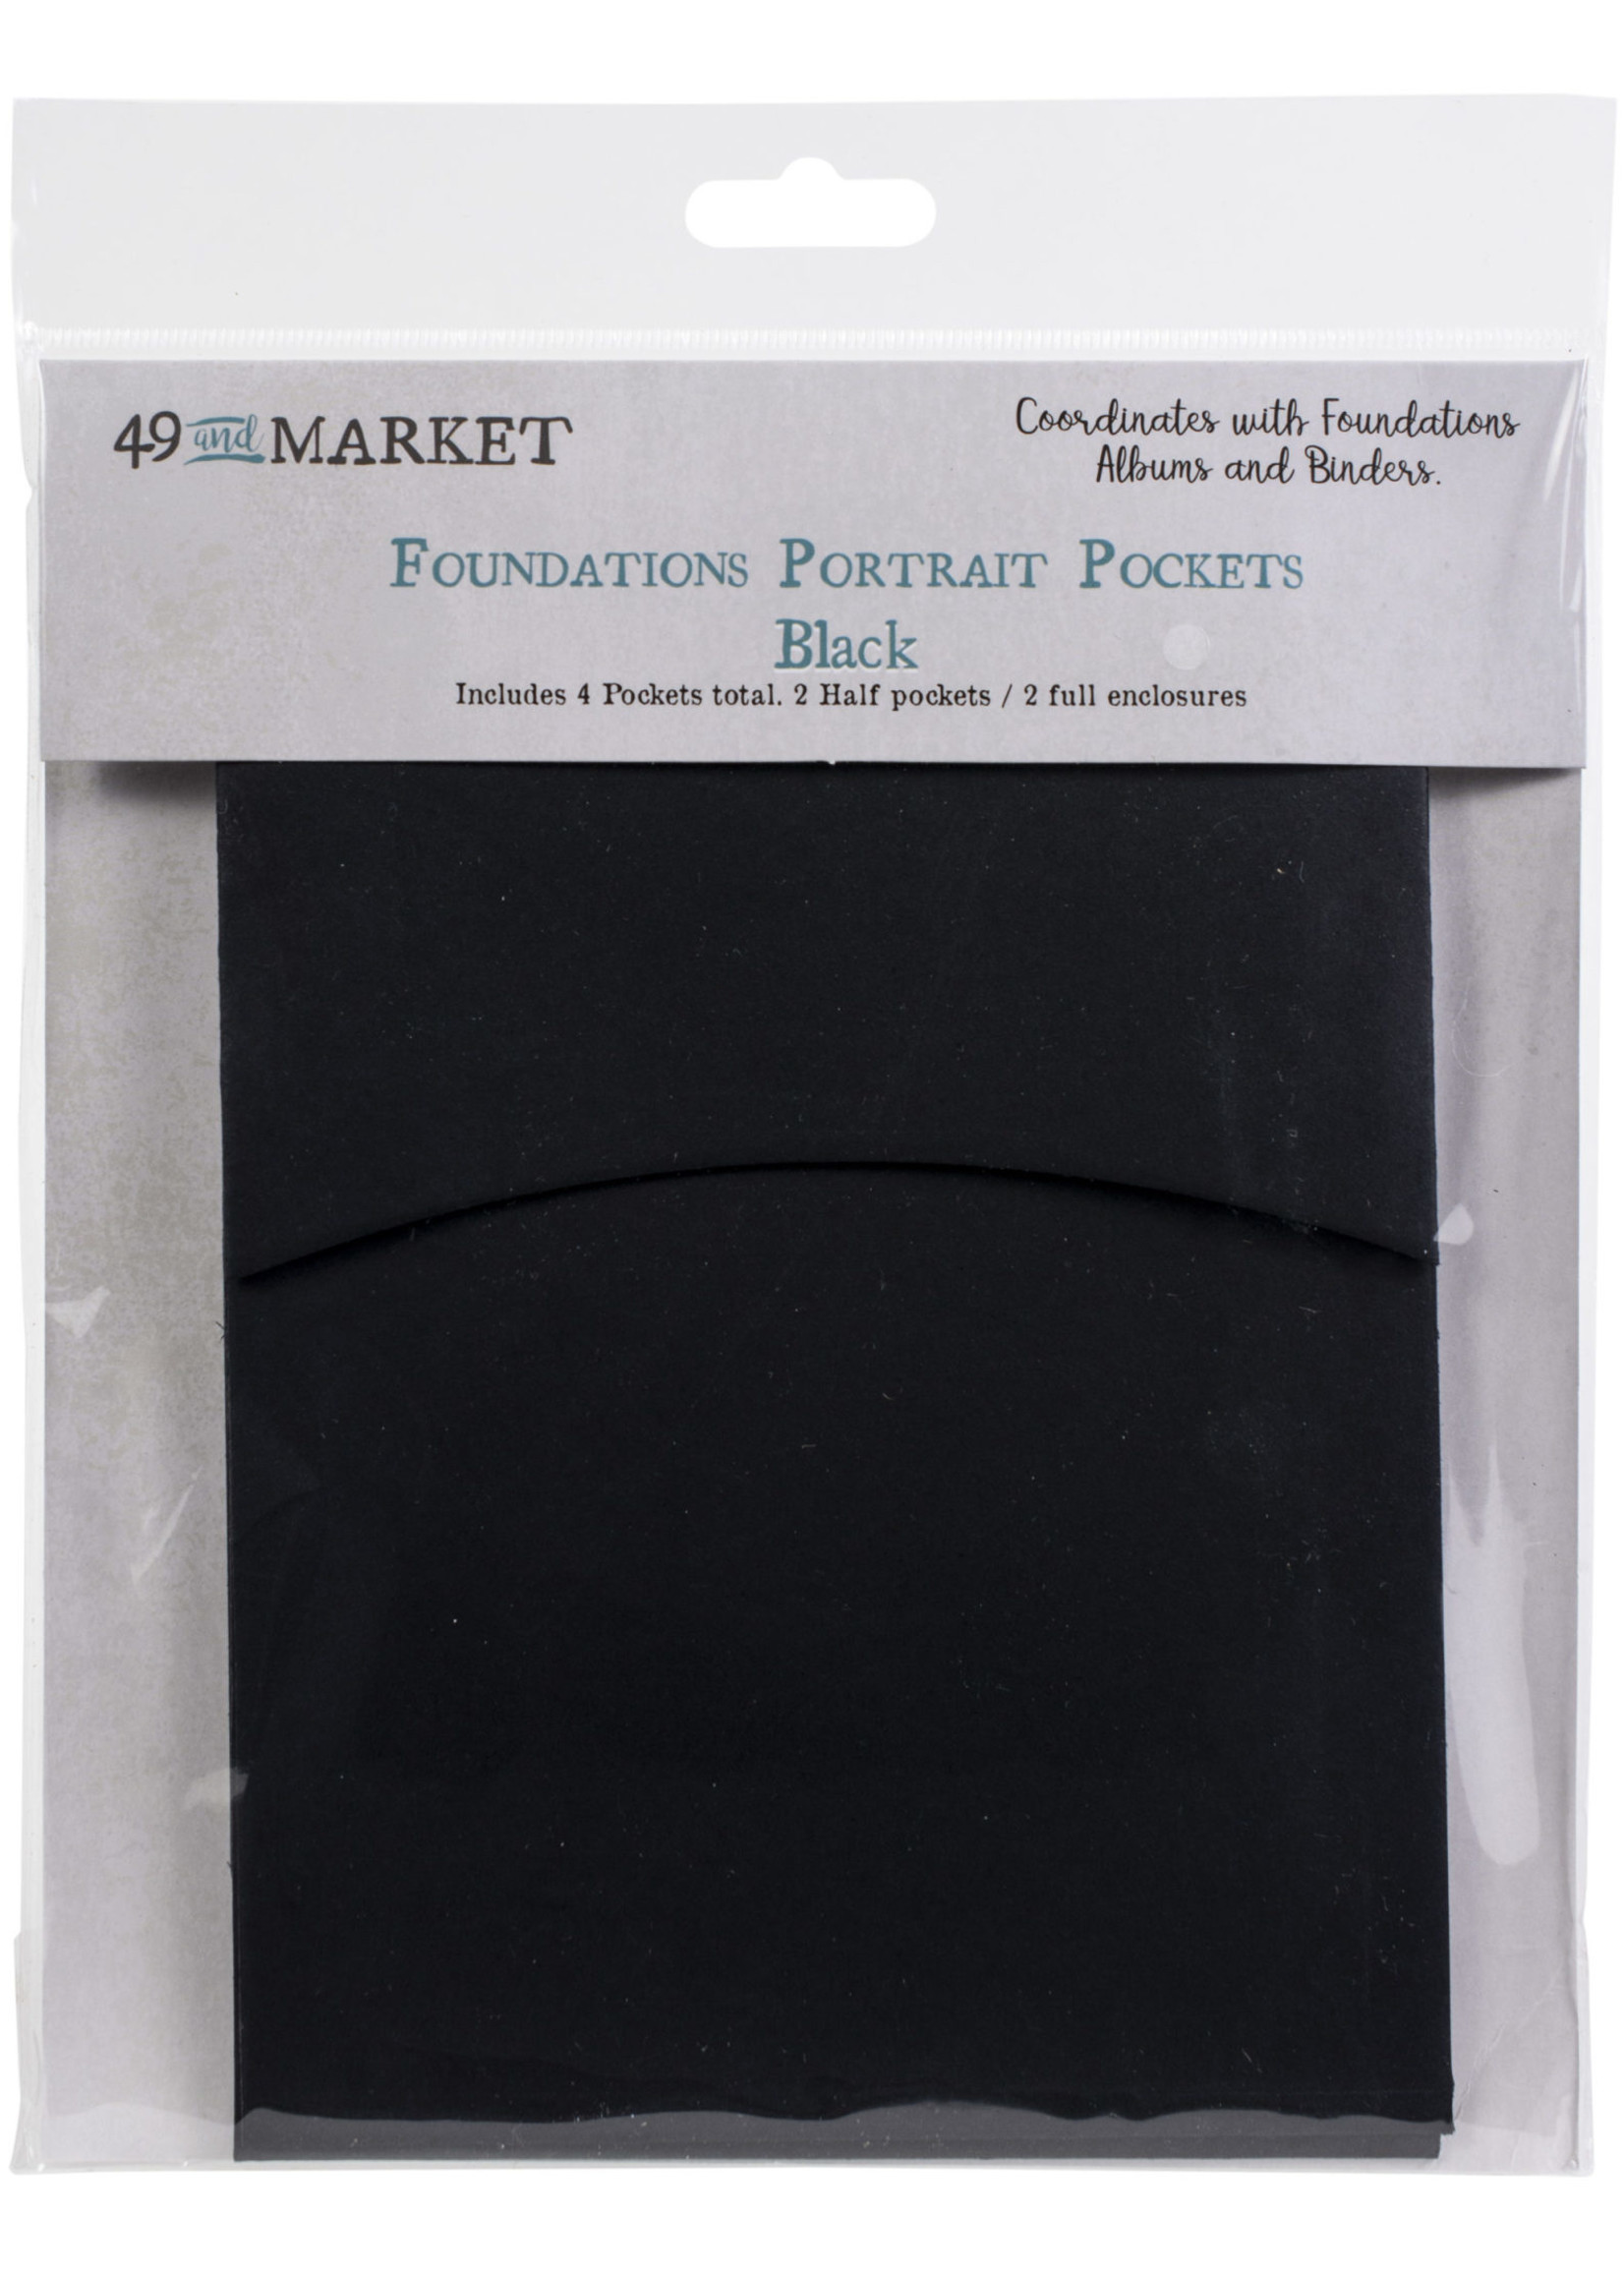 49 and Market Portrait Pockets: Black